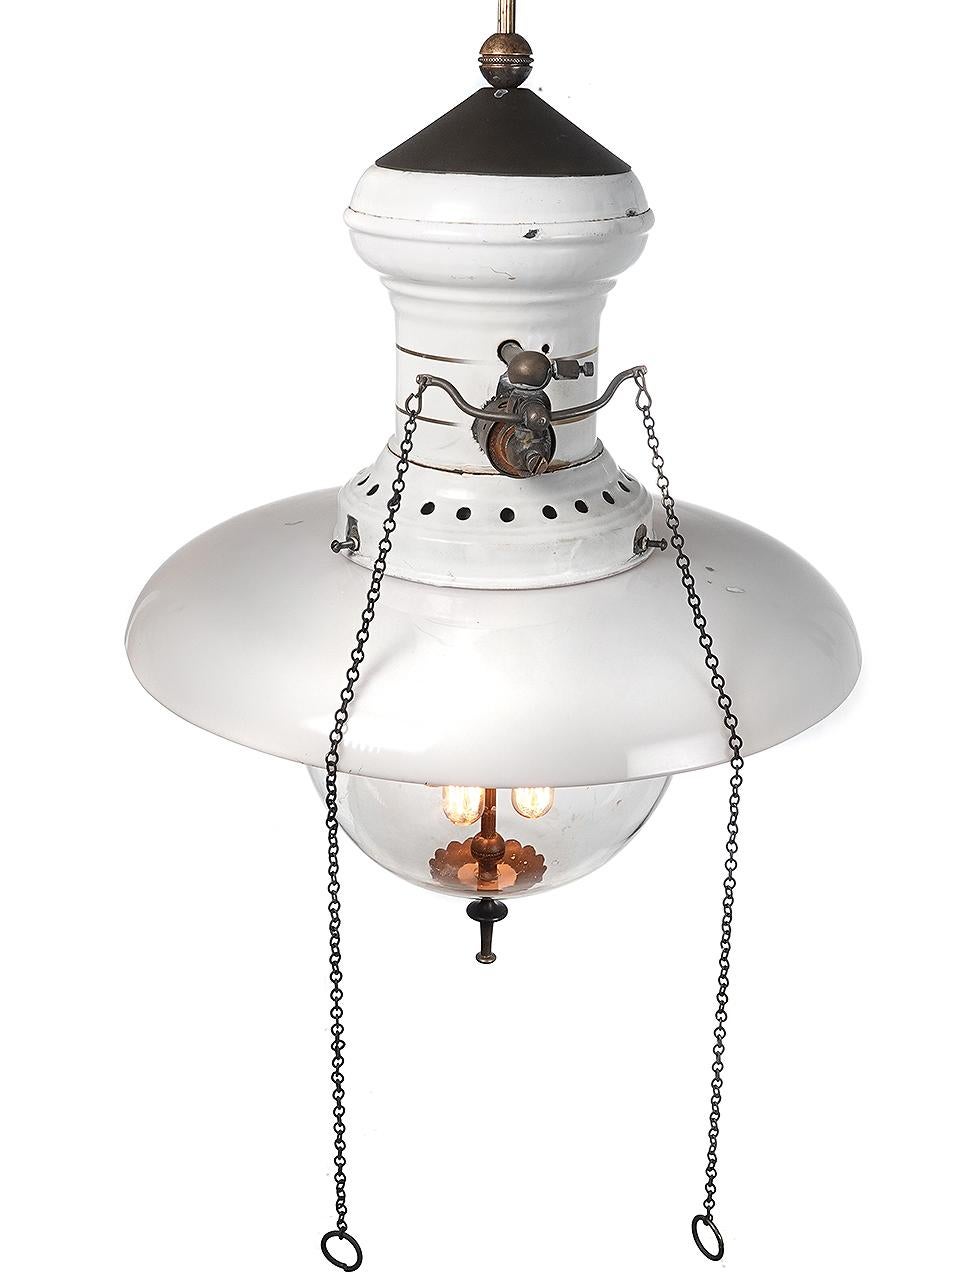 20th Century 1910 Humphrey Hanging Gas Lamp 